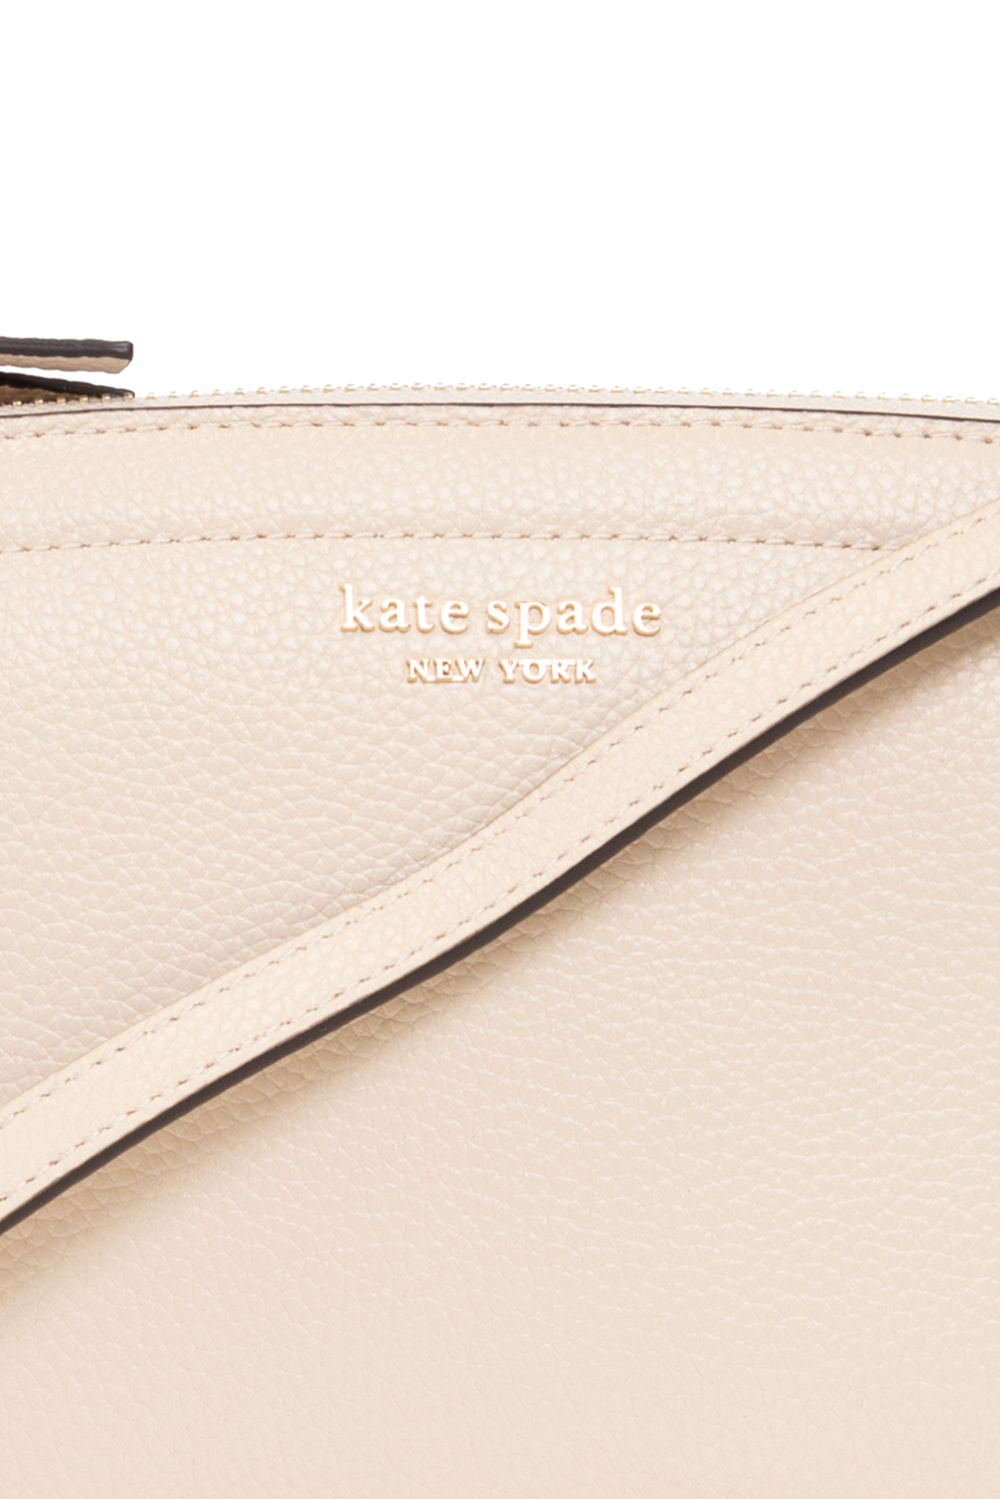 Kate Spade Knott Small Crossbody Bag